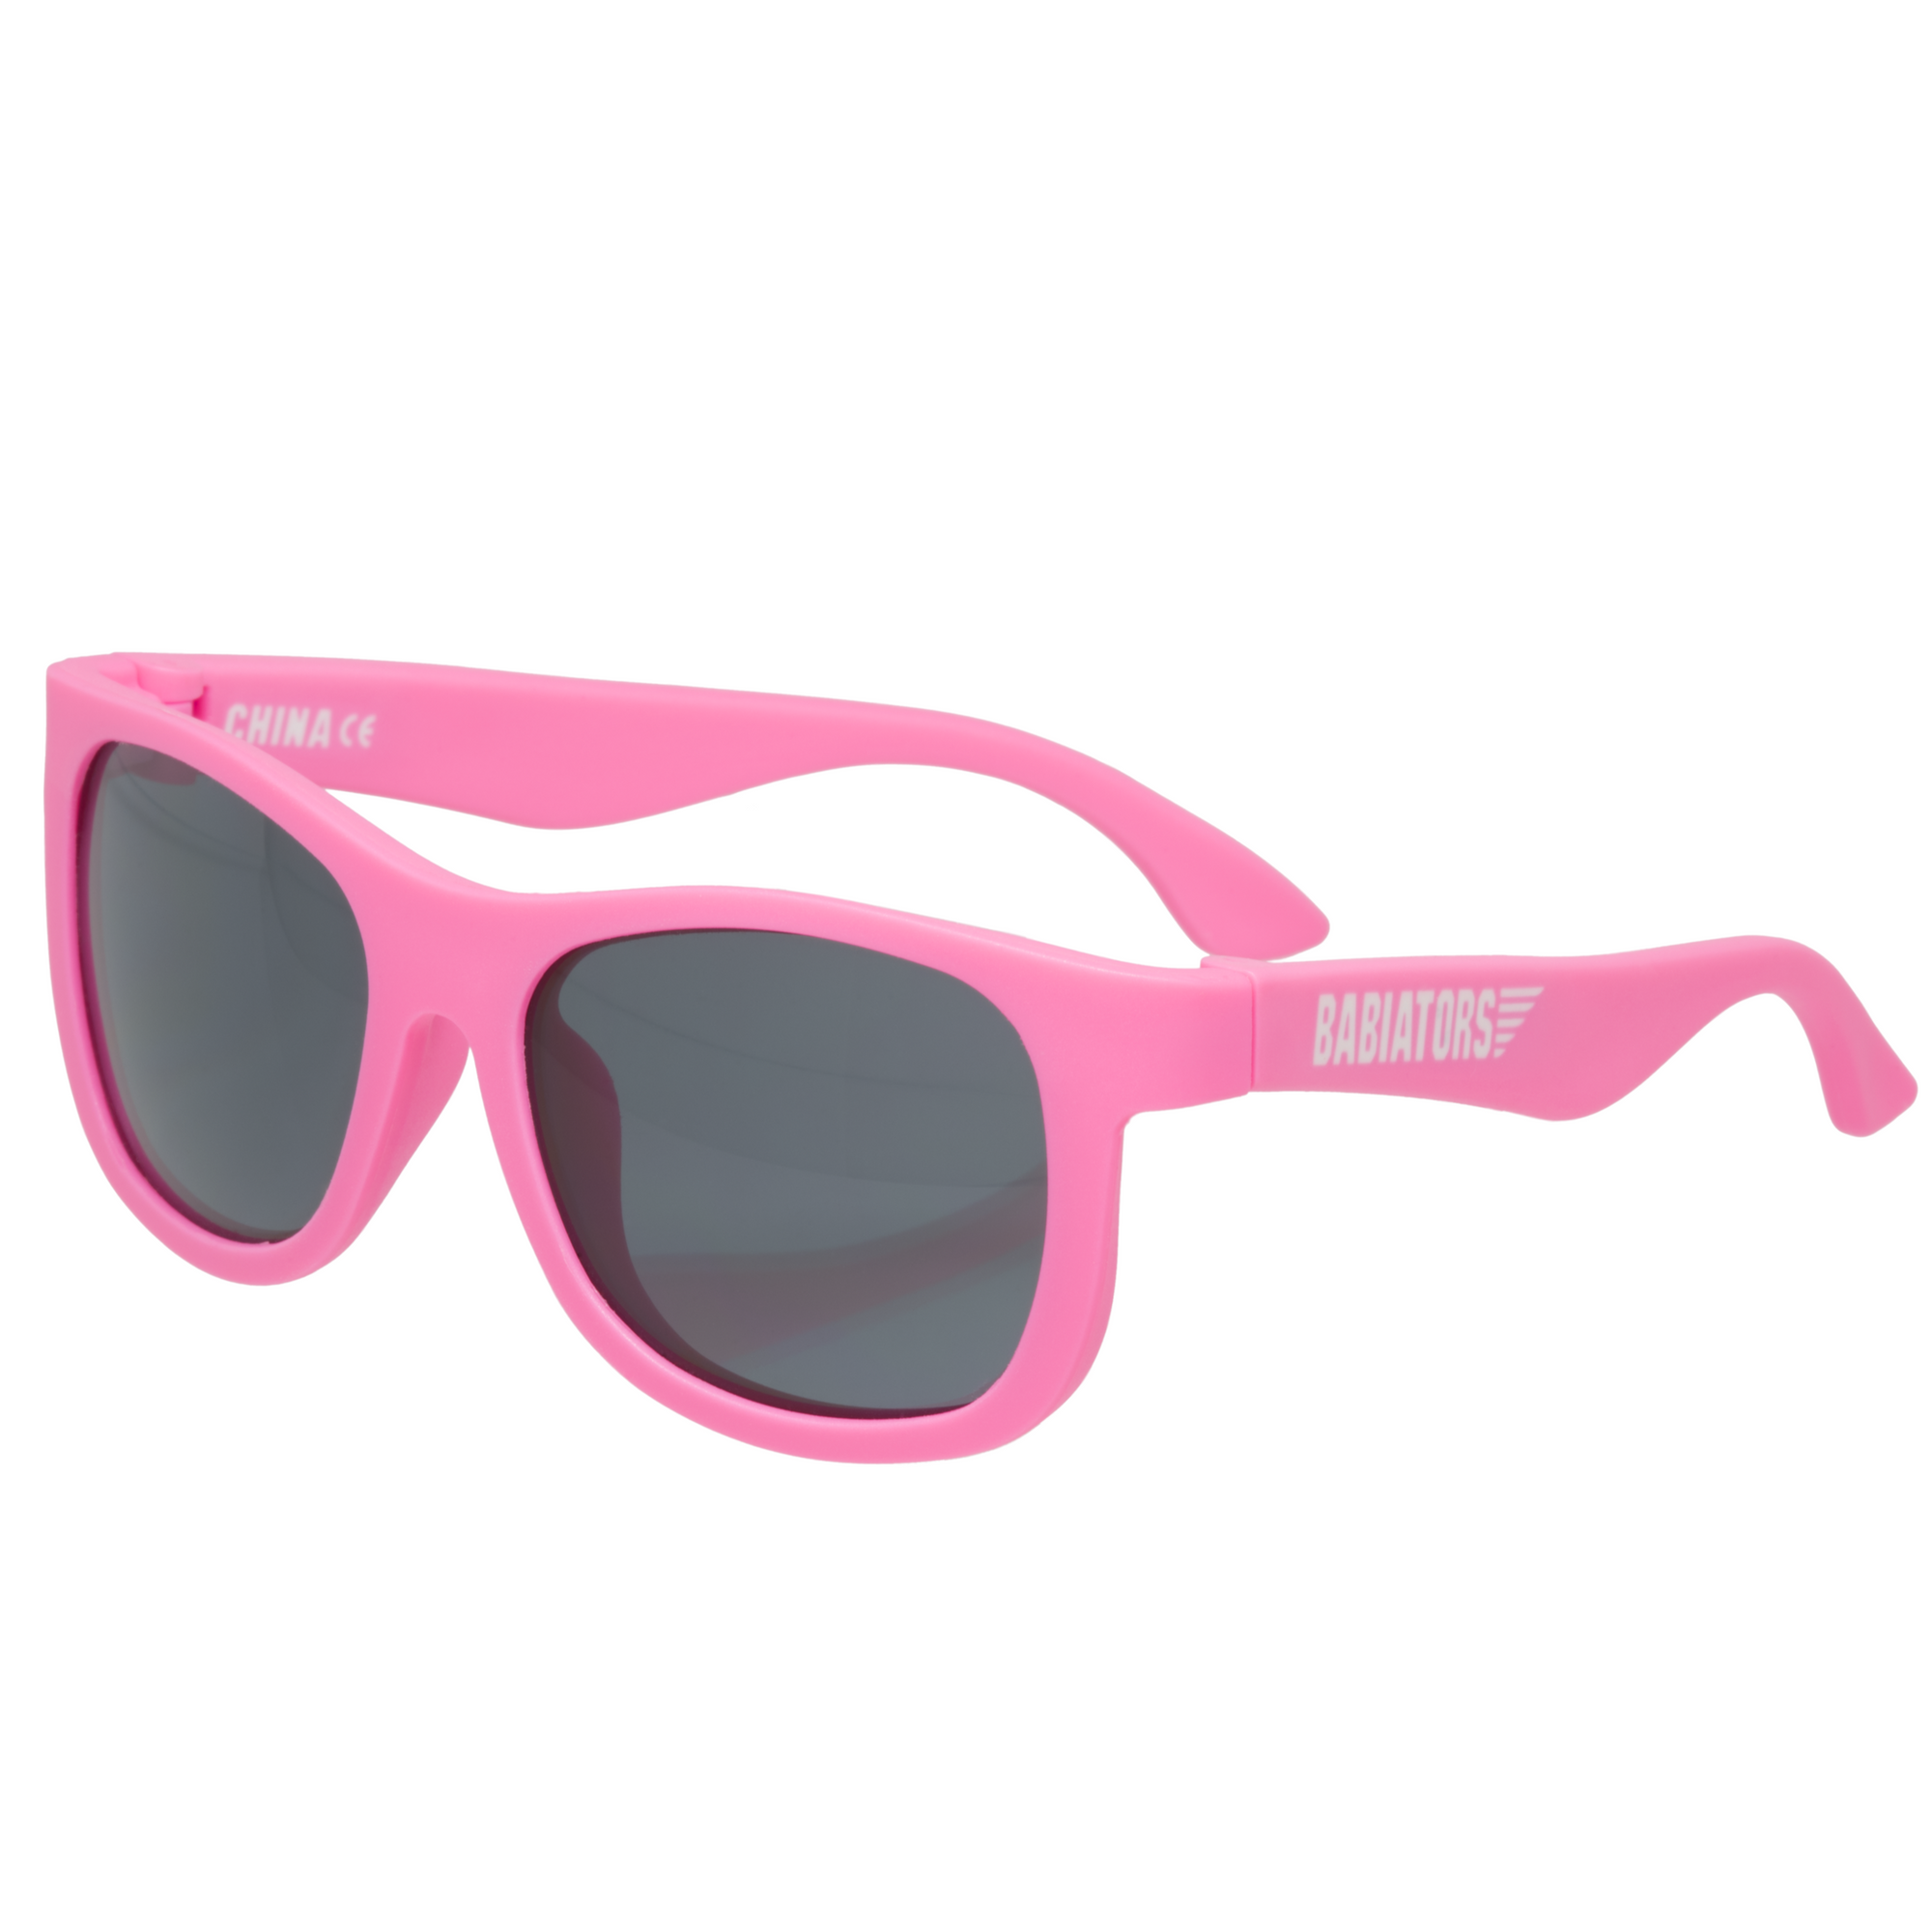 Original navigator baby and toddler sunglasses in "think pink". 100% UVA and UVB protection. Babiators.